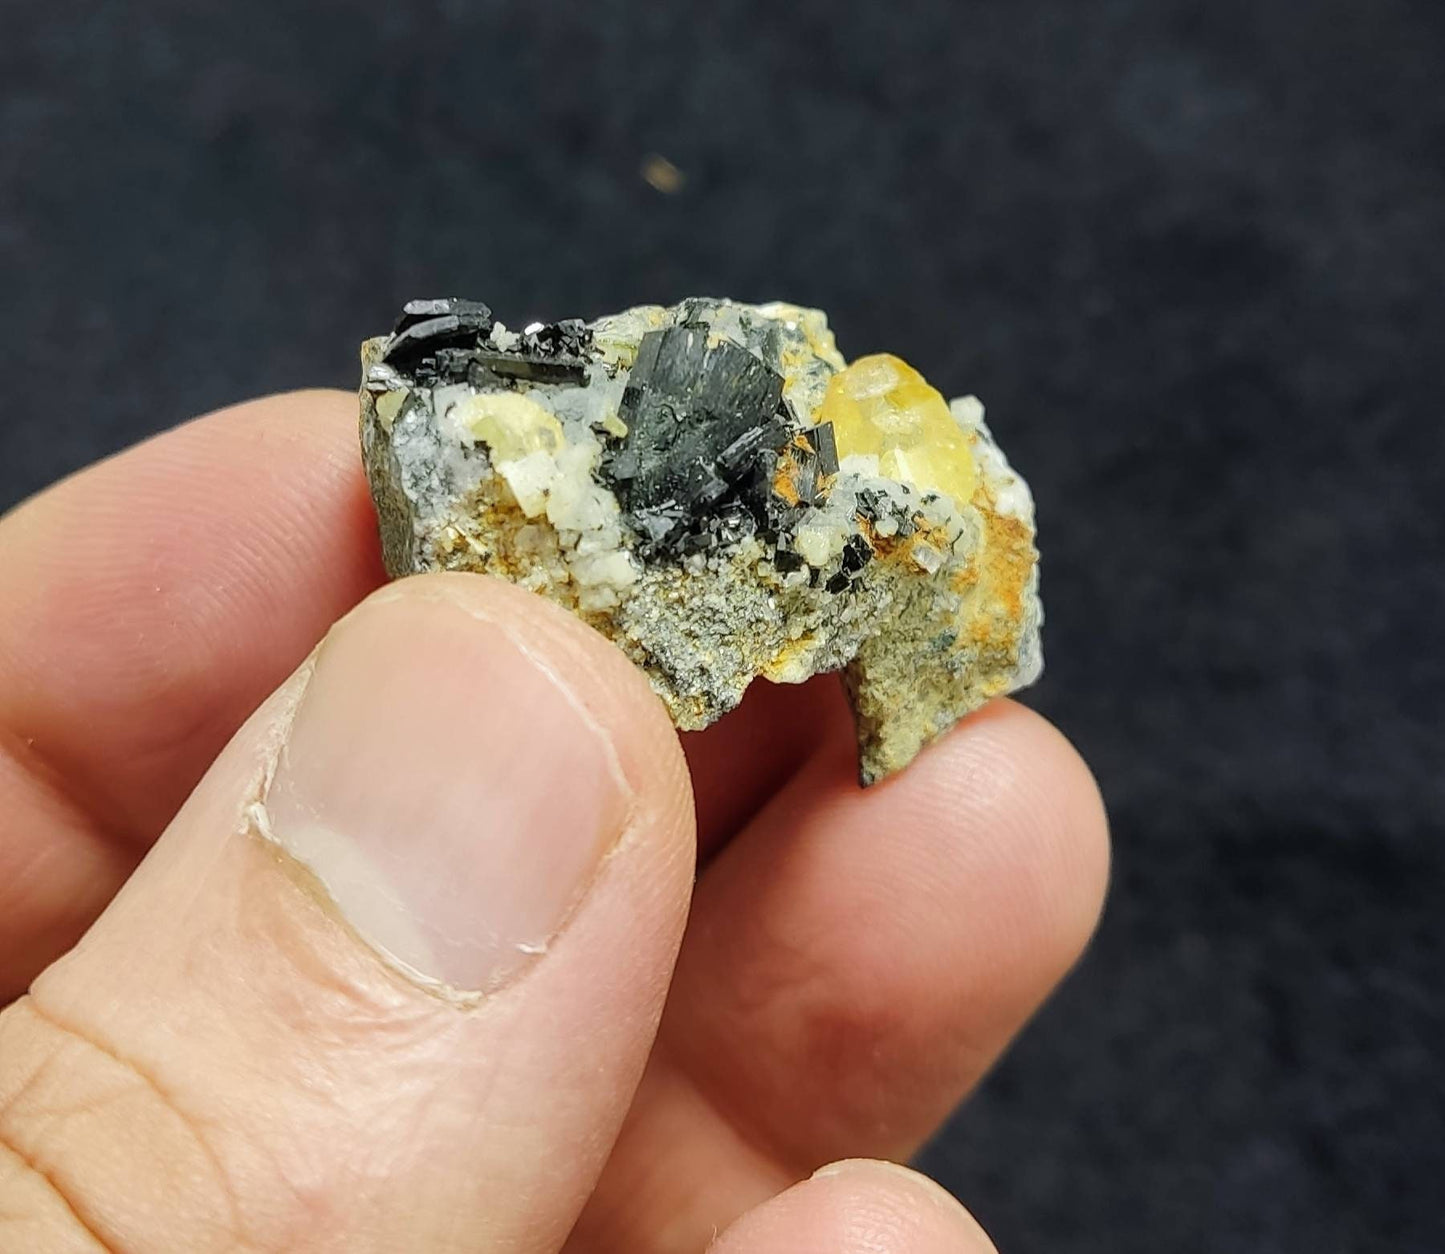 Titanite sphene with actinolite or possibly aegirine on matrix 23 grams